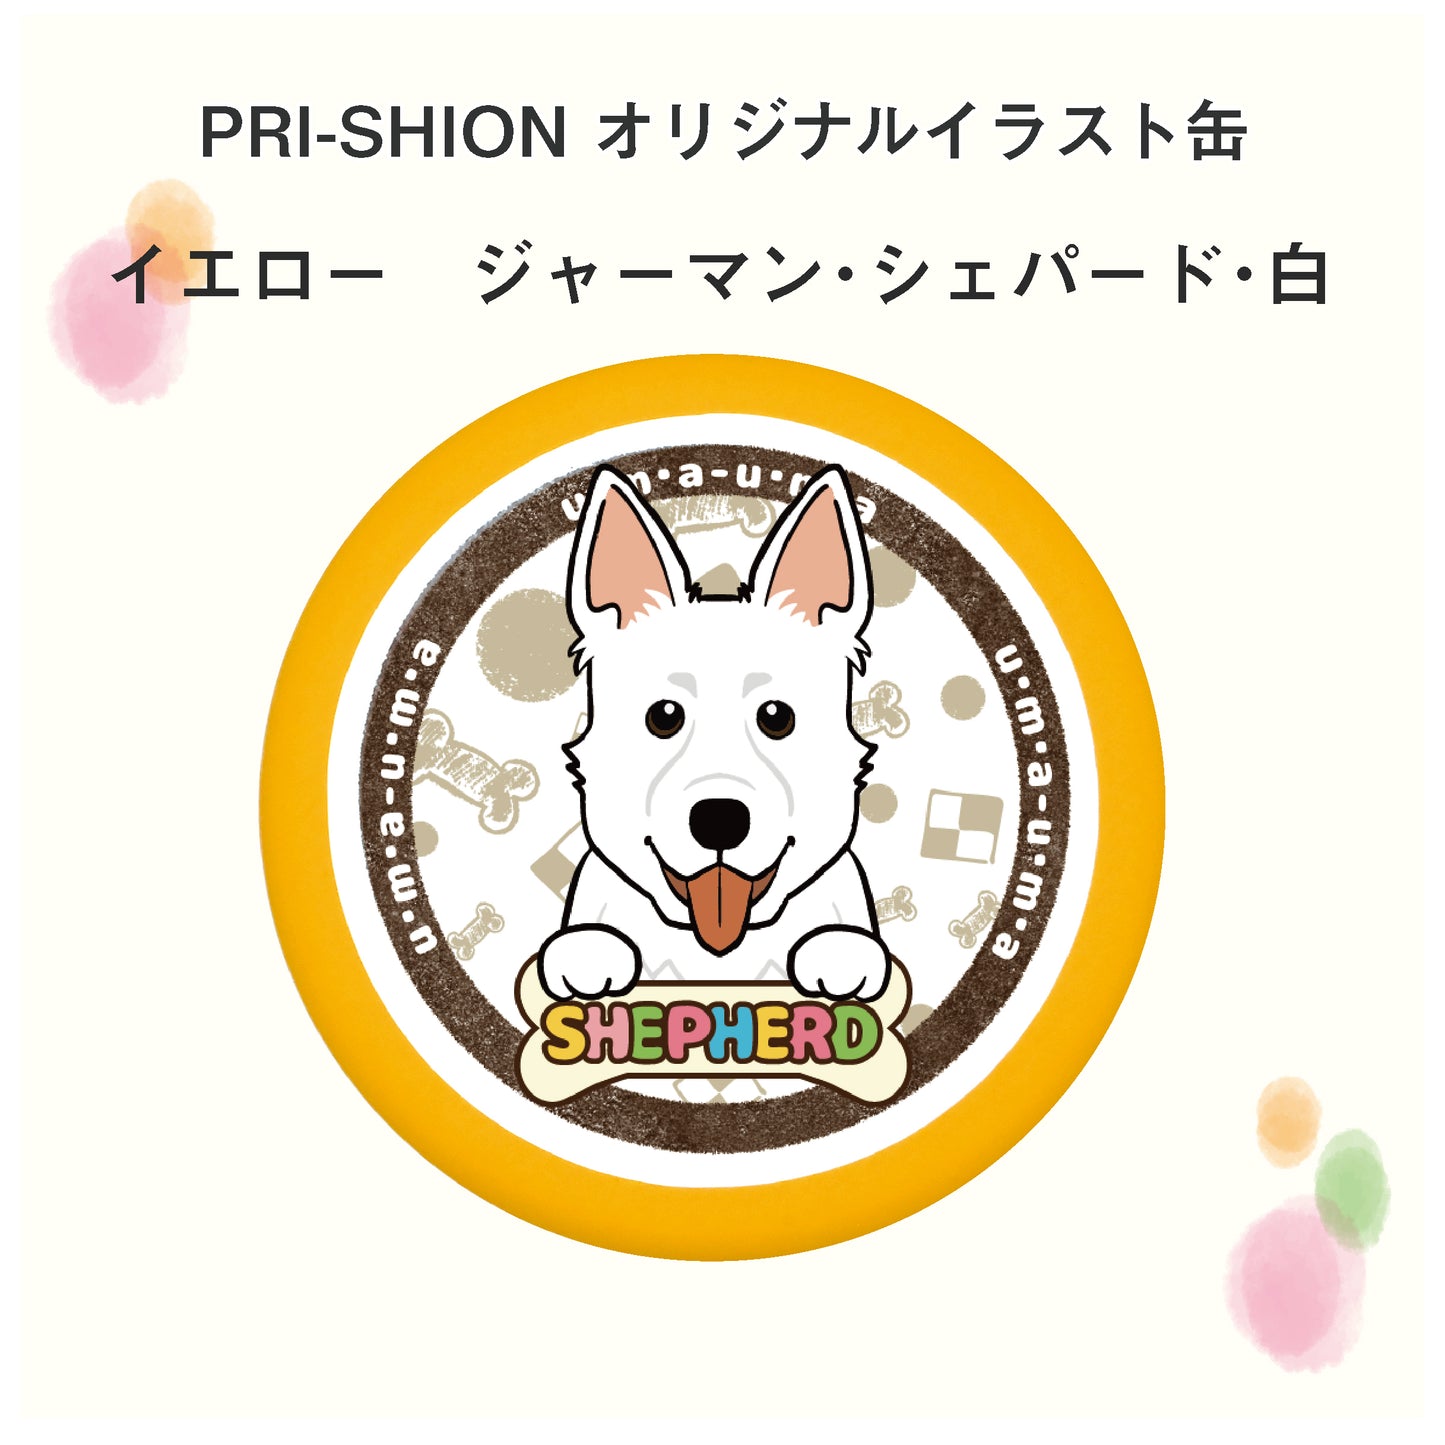 PRI-SHION オリジナルイラストうまうま缶　ジャーマン・シェパード